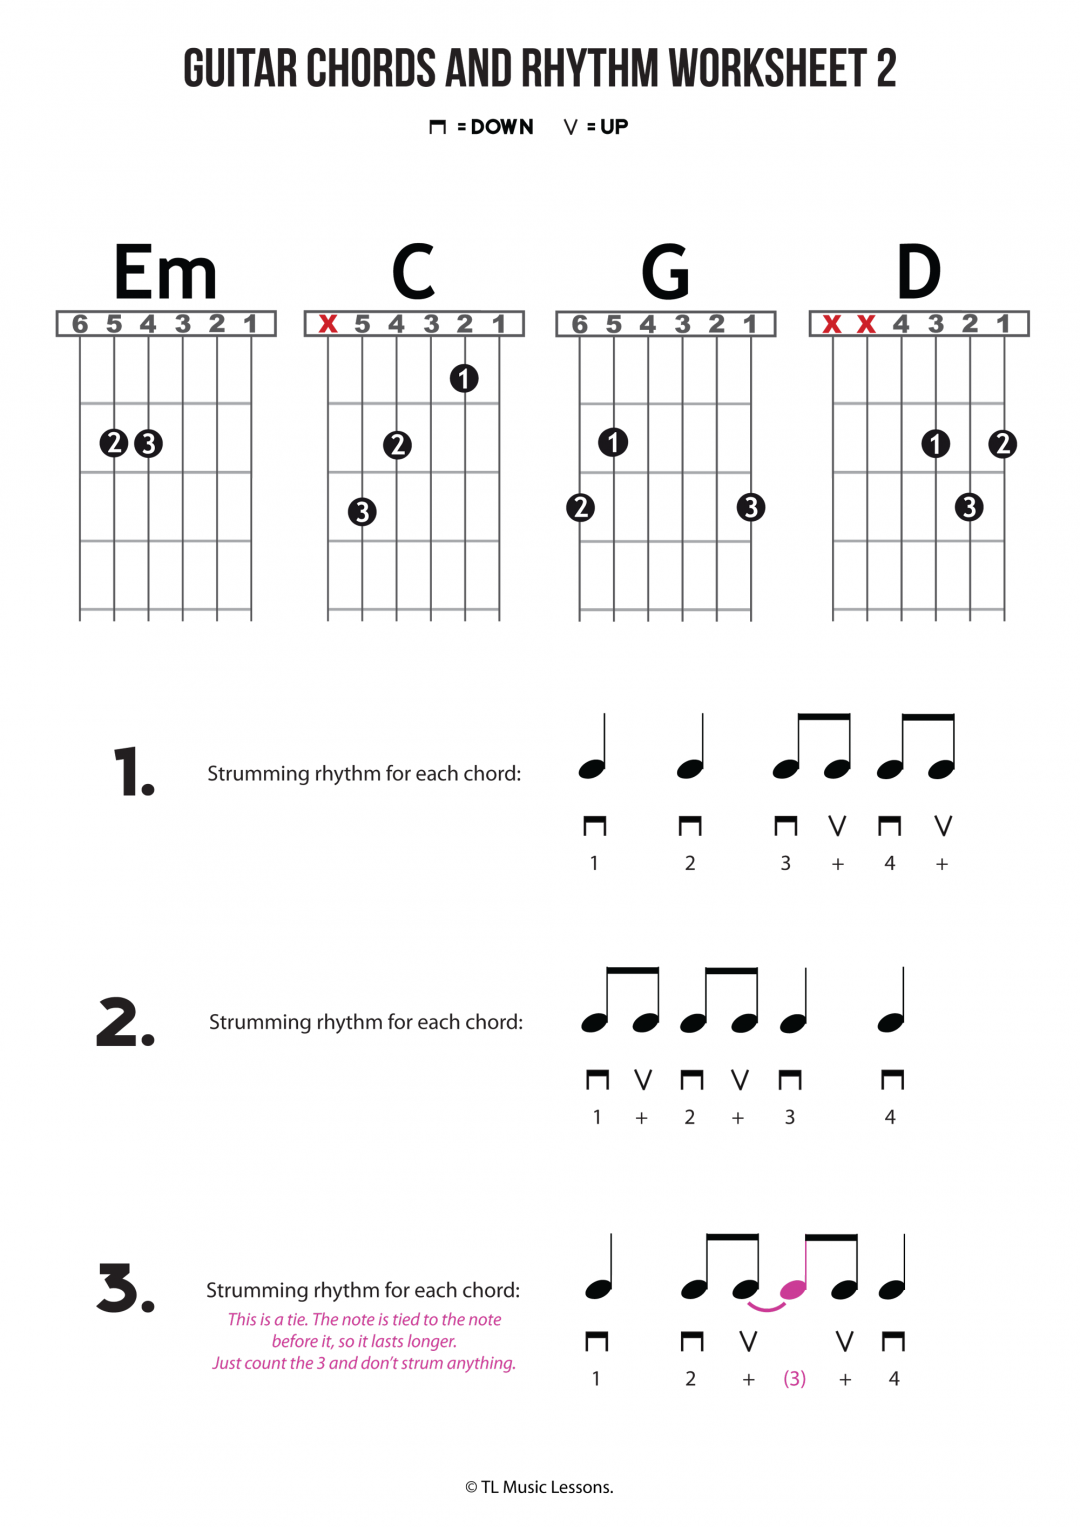 Guitar Chords and Rhythm Worksheet 2